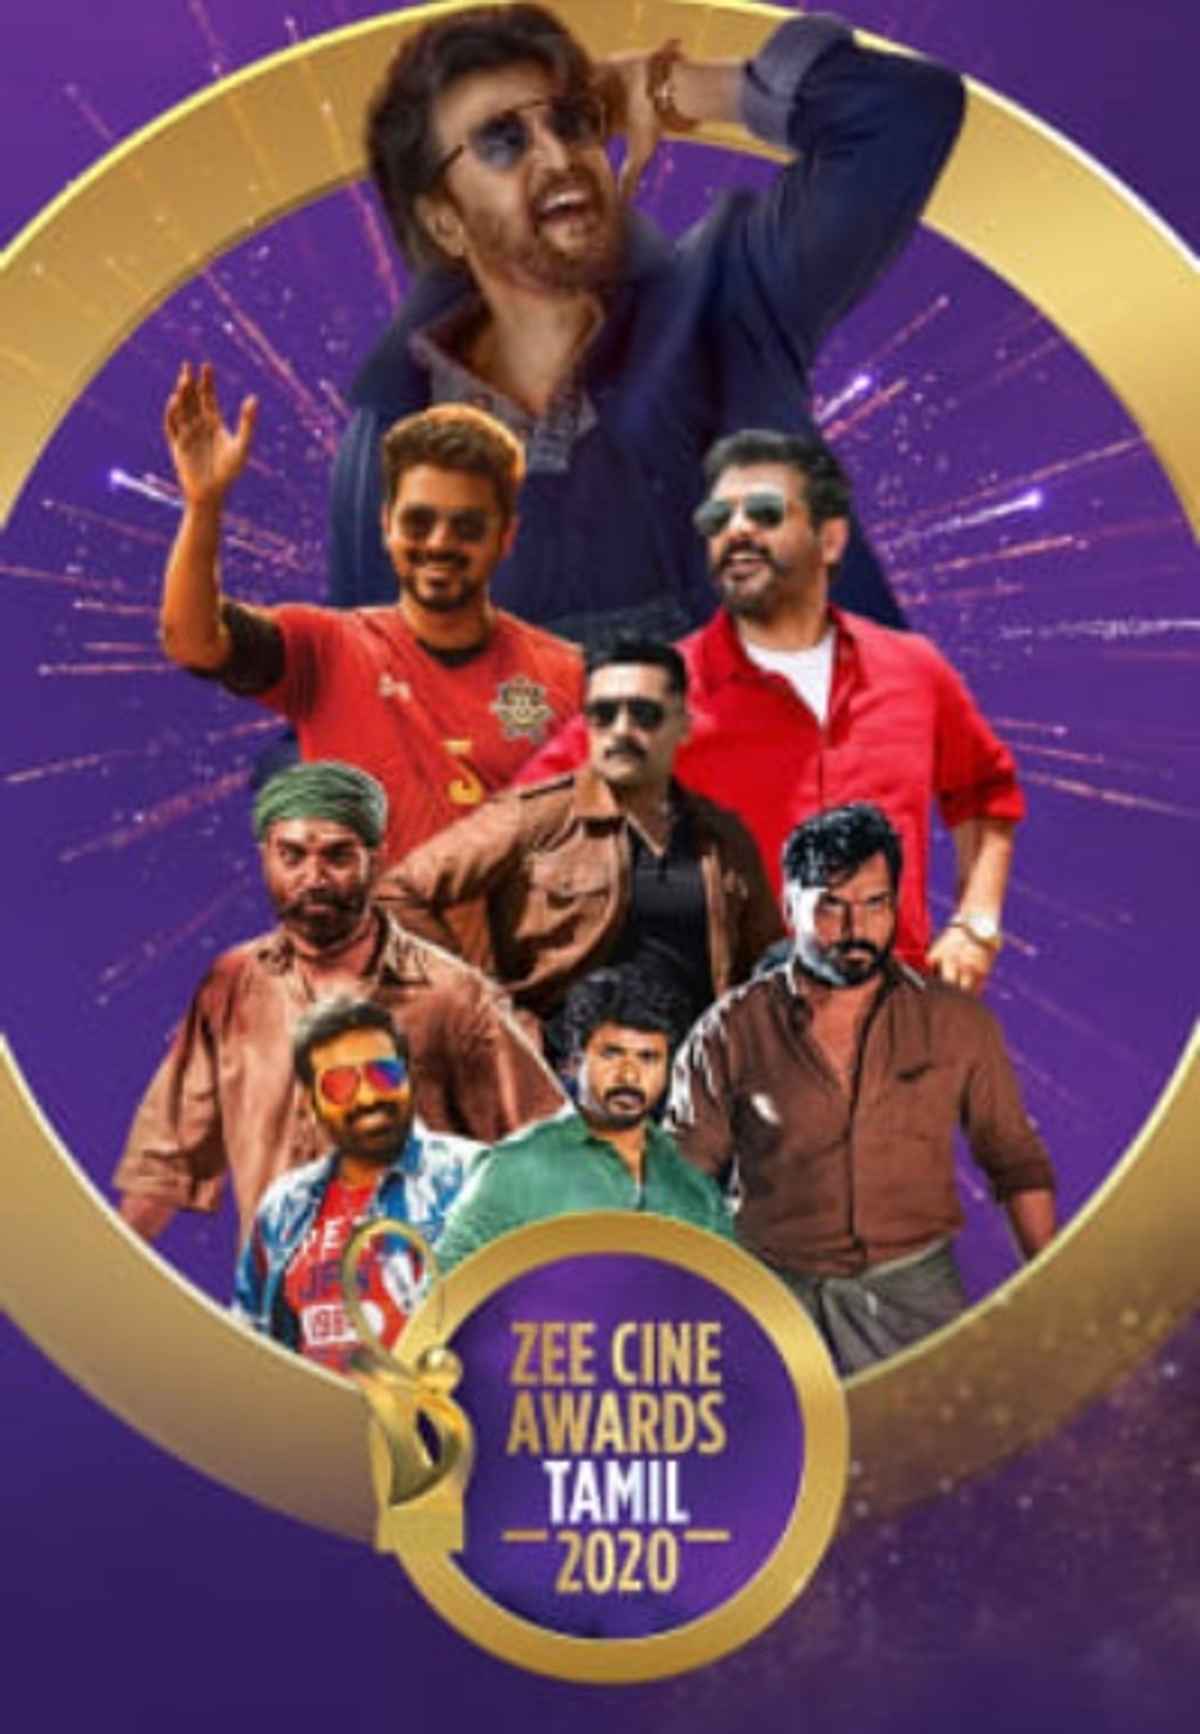 Watch ZEE Cine Awards Tamil 2020 Online, All Seasons or Episodes